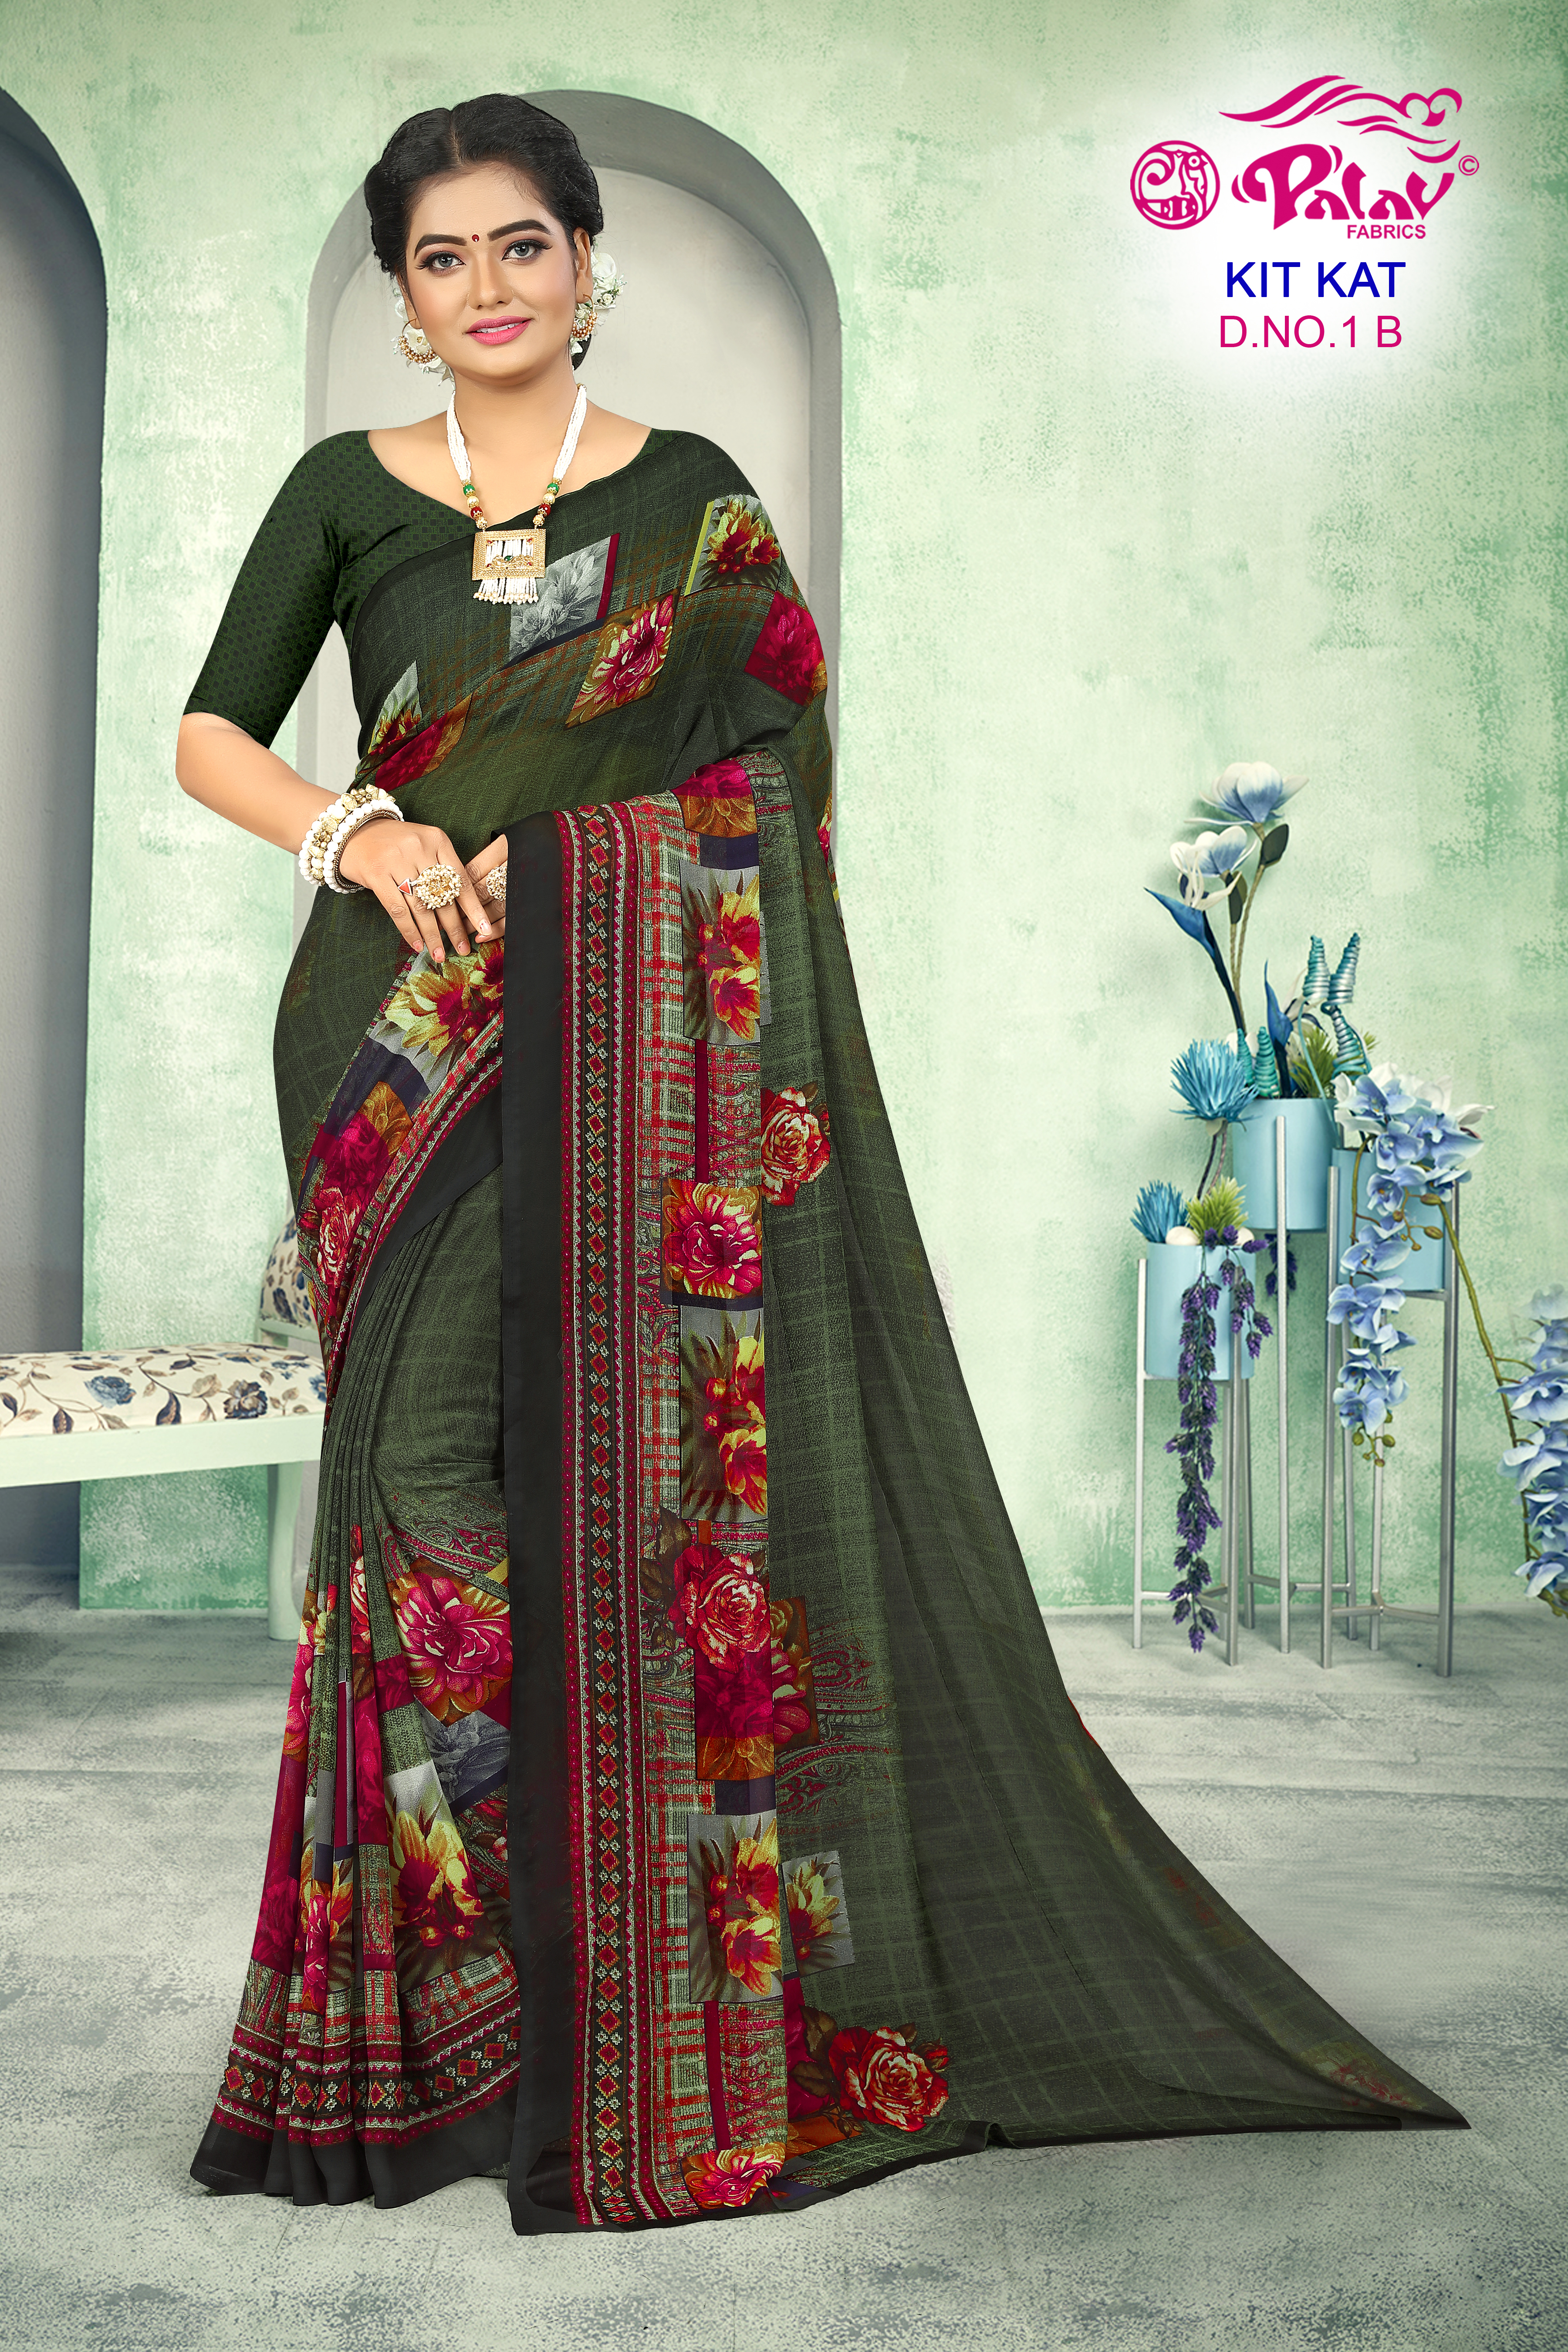 Kit kat Gergette printed saree by palav fabrics